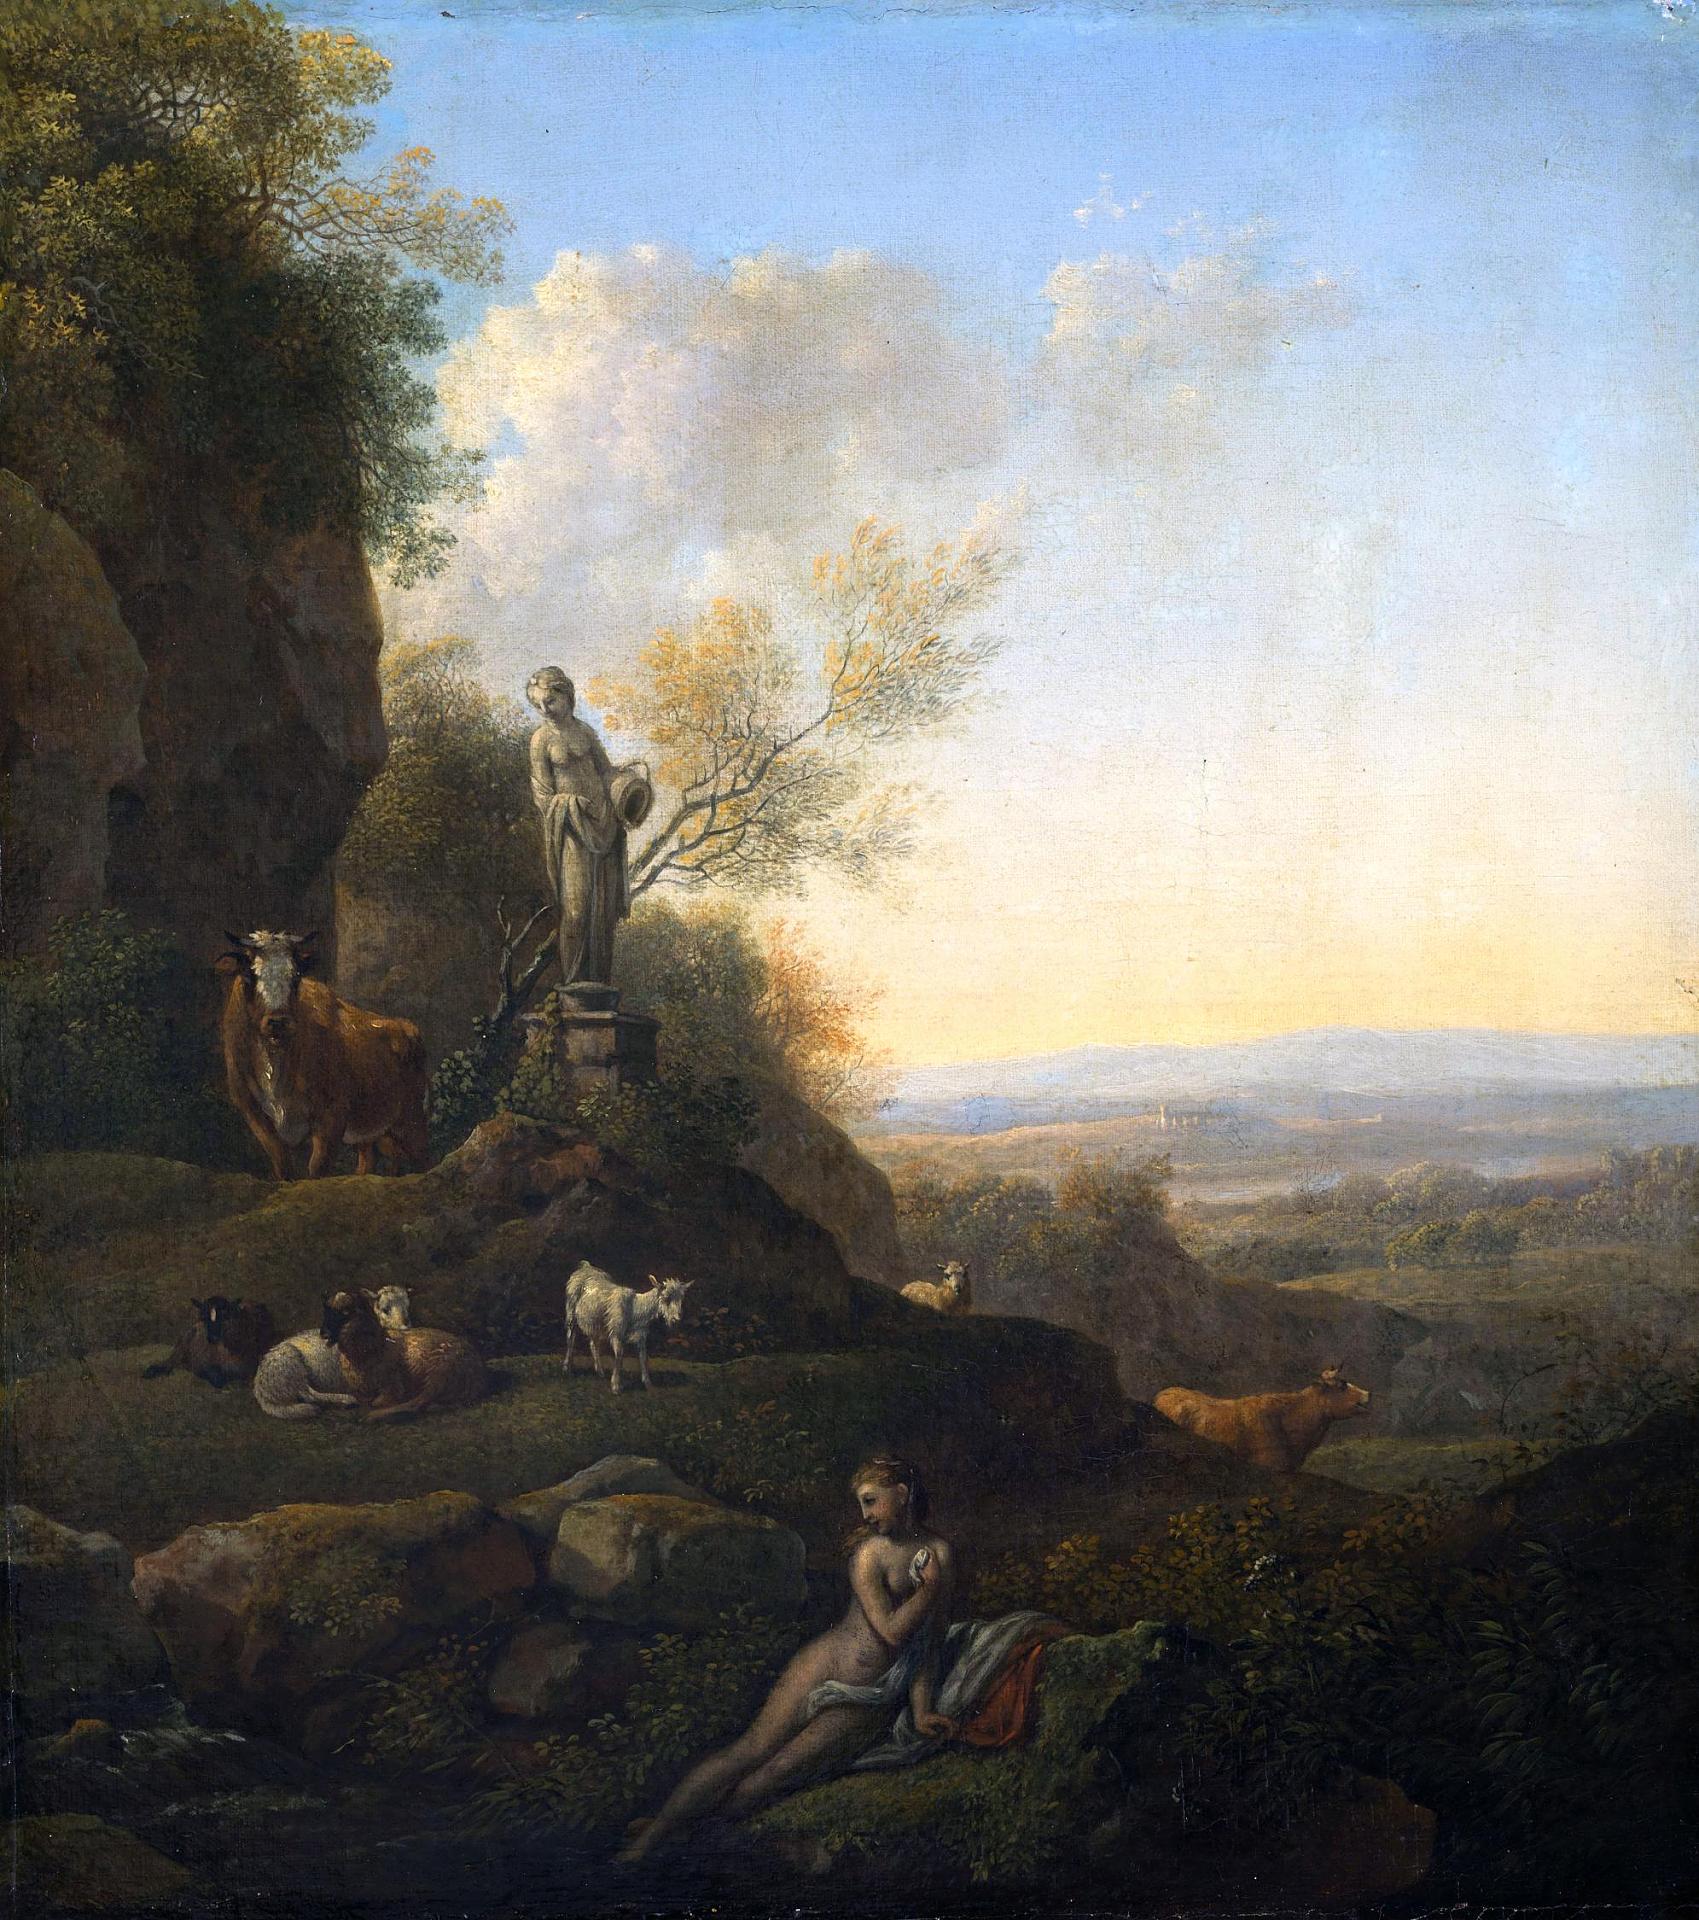 Иоганн Христиан Кленгель. "Пейзаж". 1816. Эрмитаж, Санкт-Петербург.